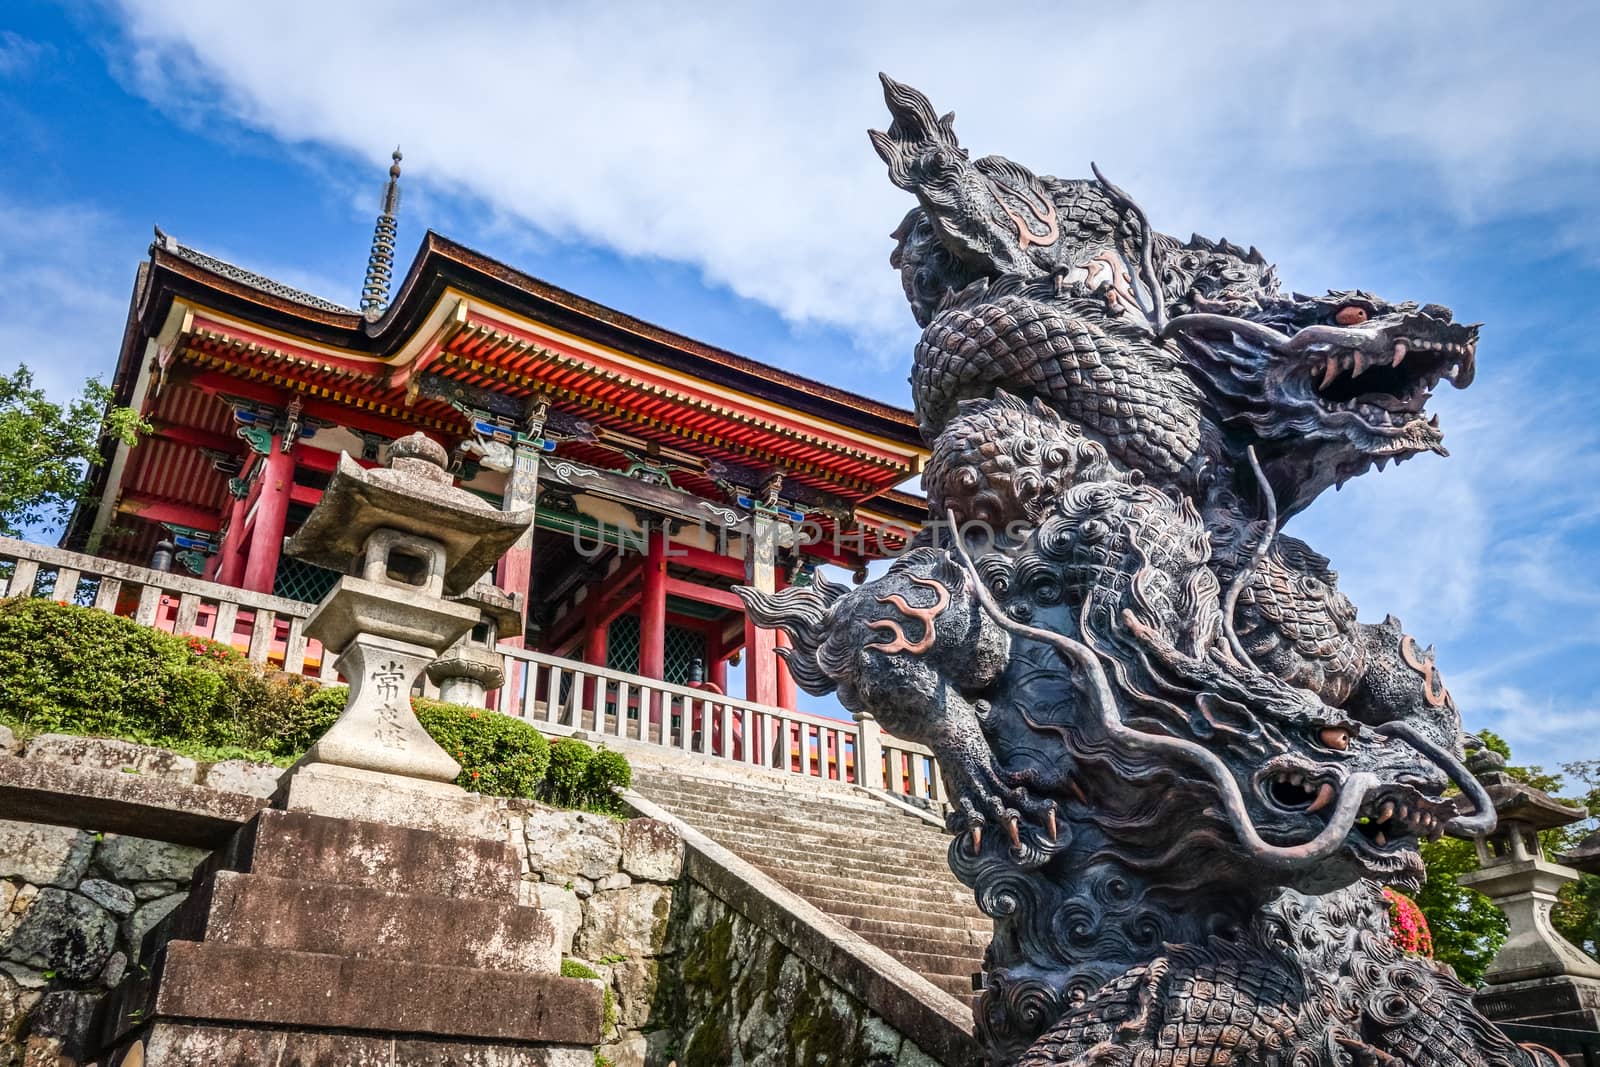 Dragon statue in front of the kiyomizu-dera temple gate, Kyoto, Japan